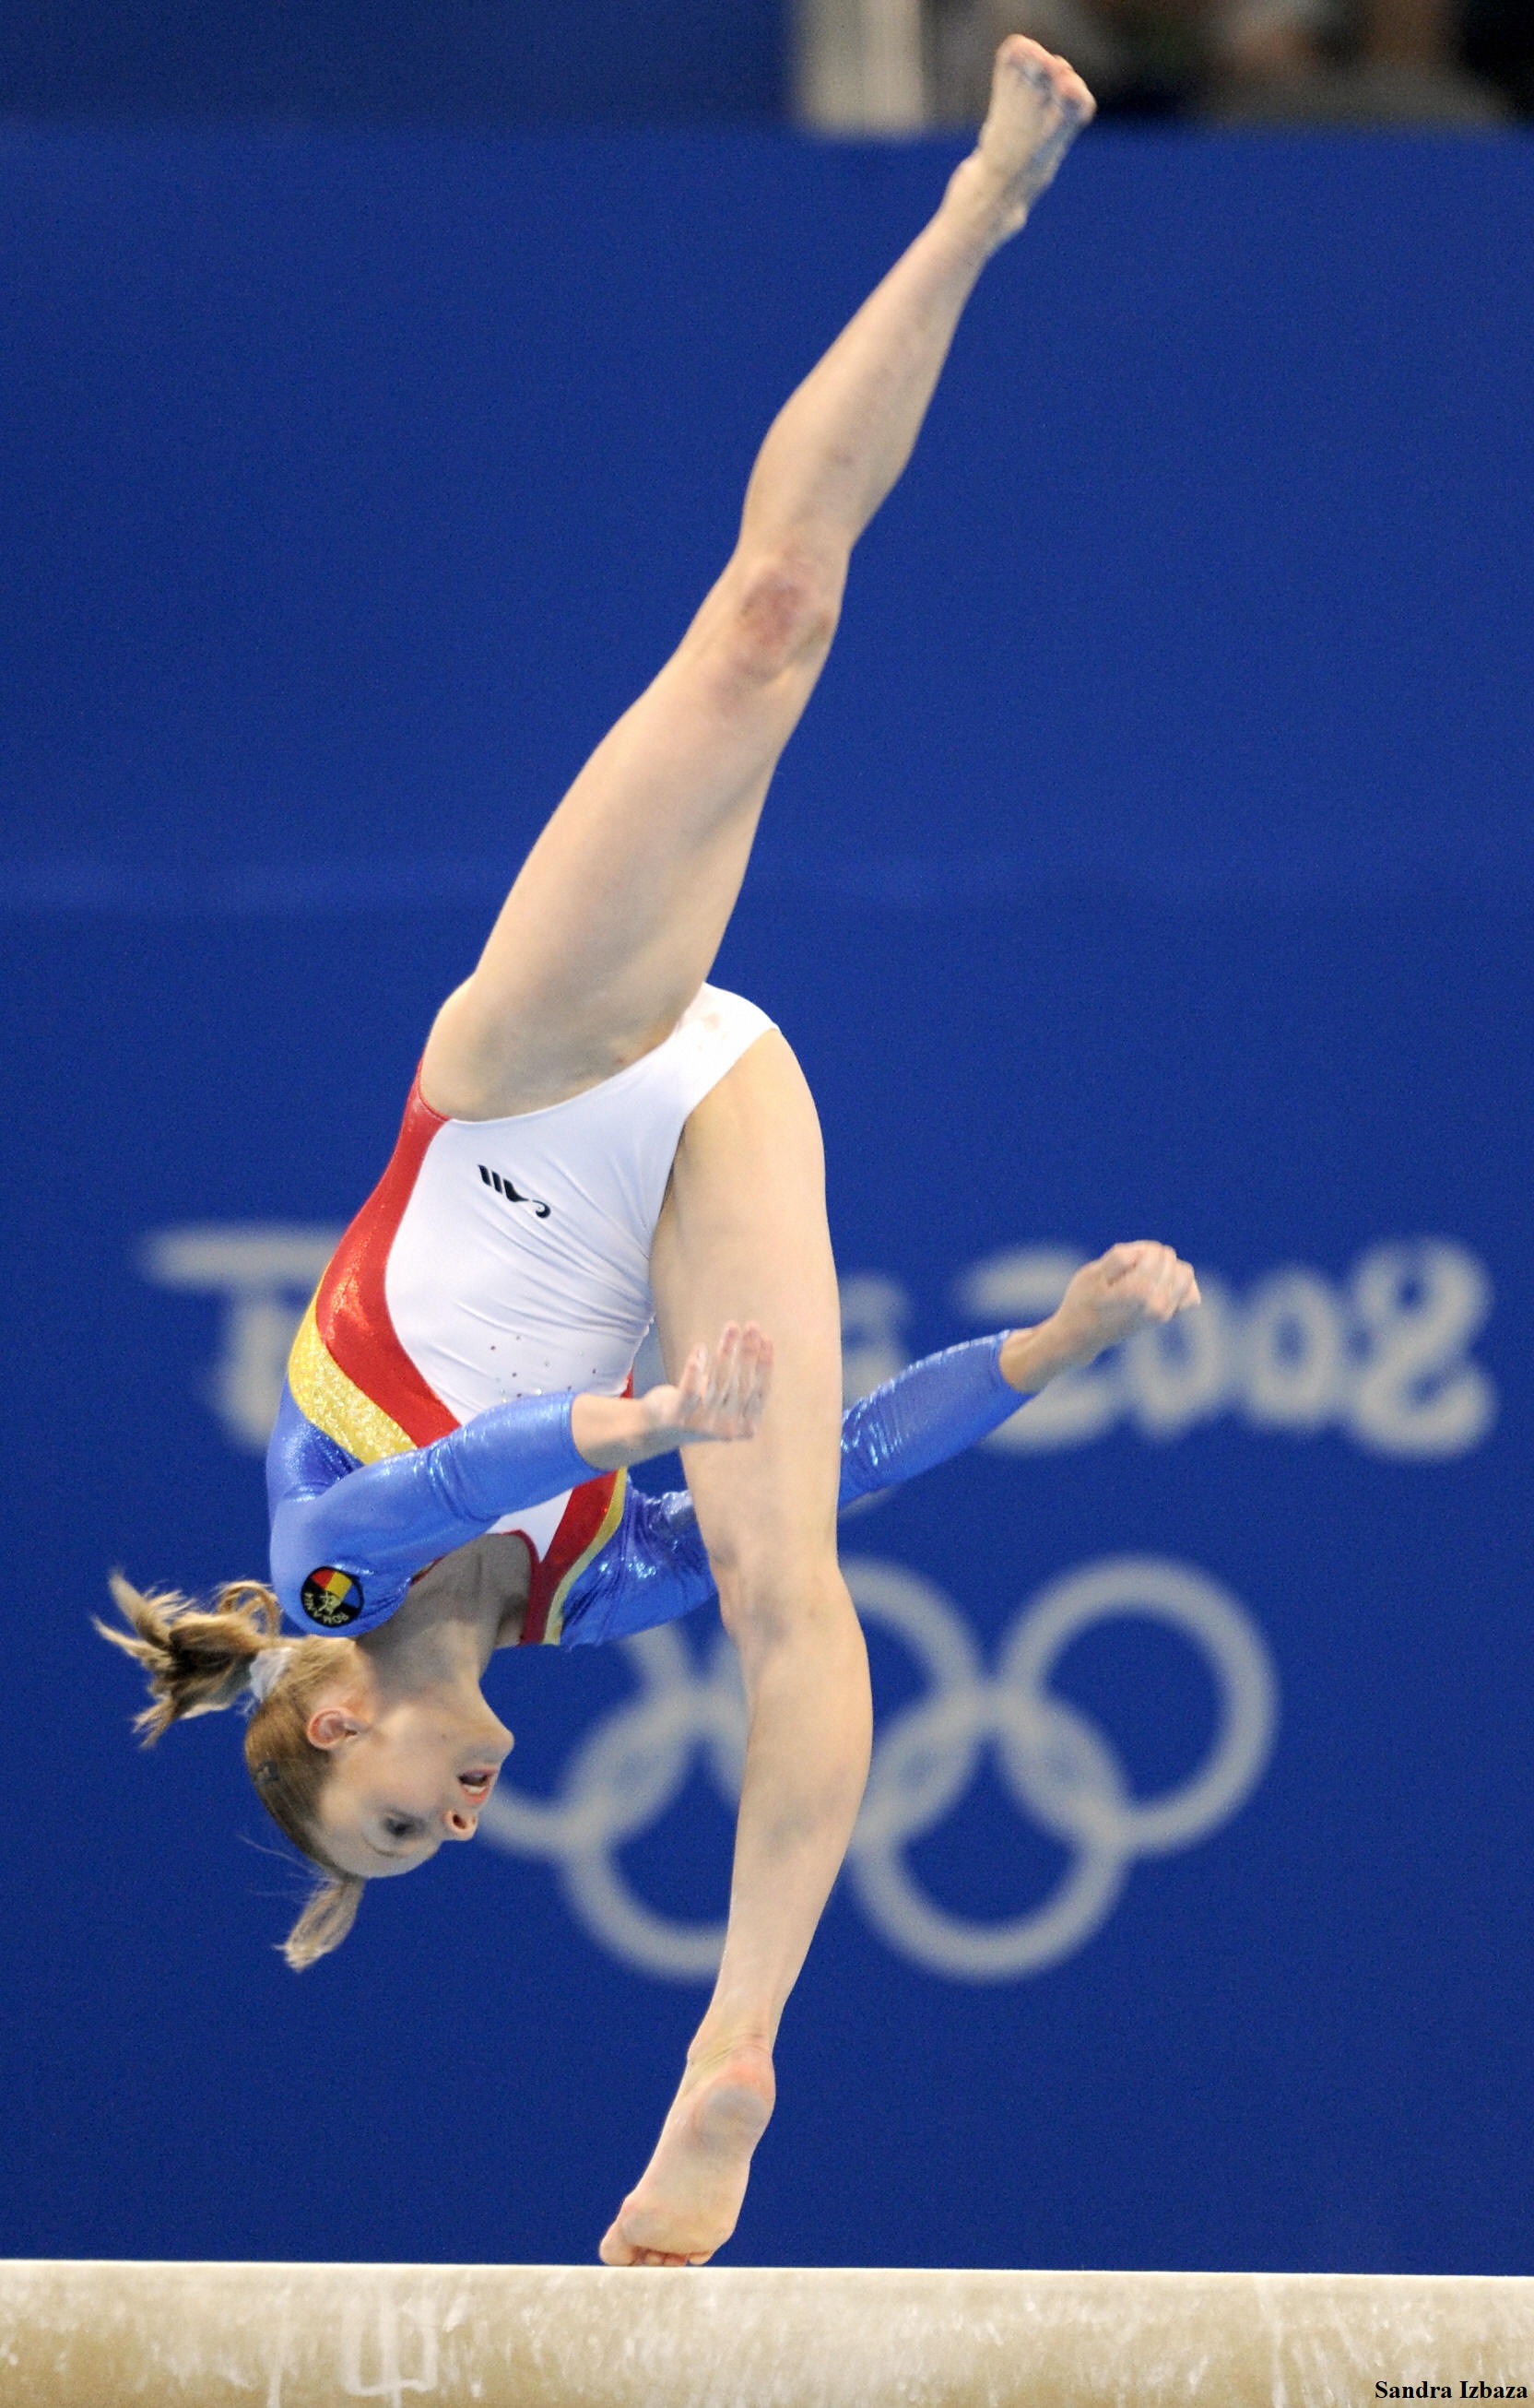 Artistic Gymnast Sandra Izbasa On The Balance Beam During The 2008 Oly